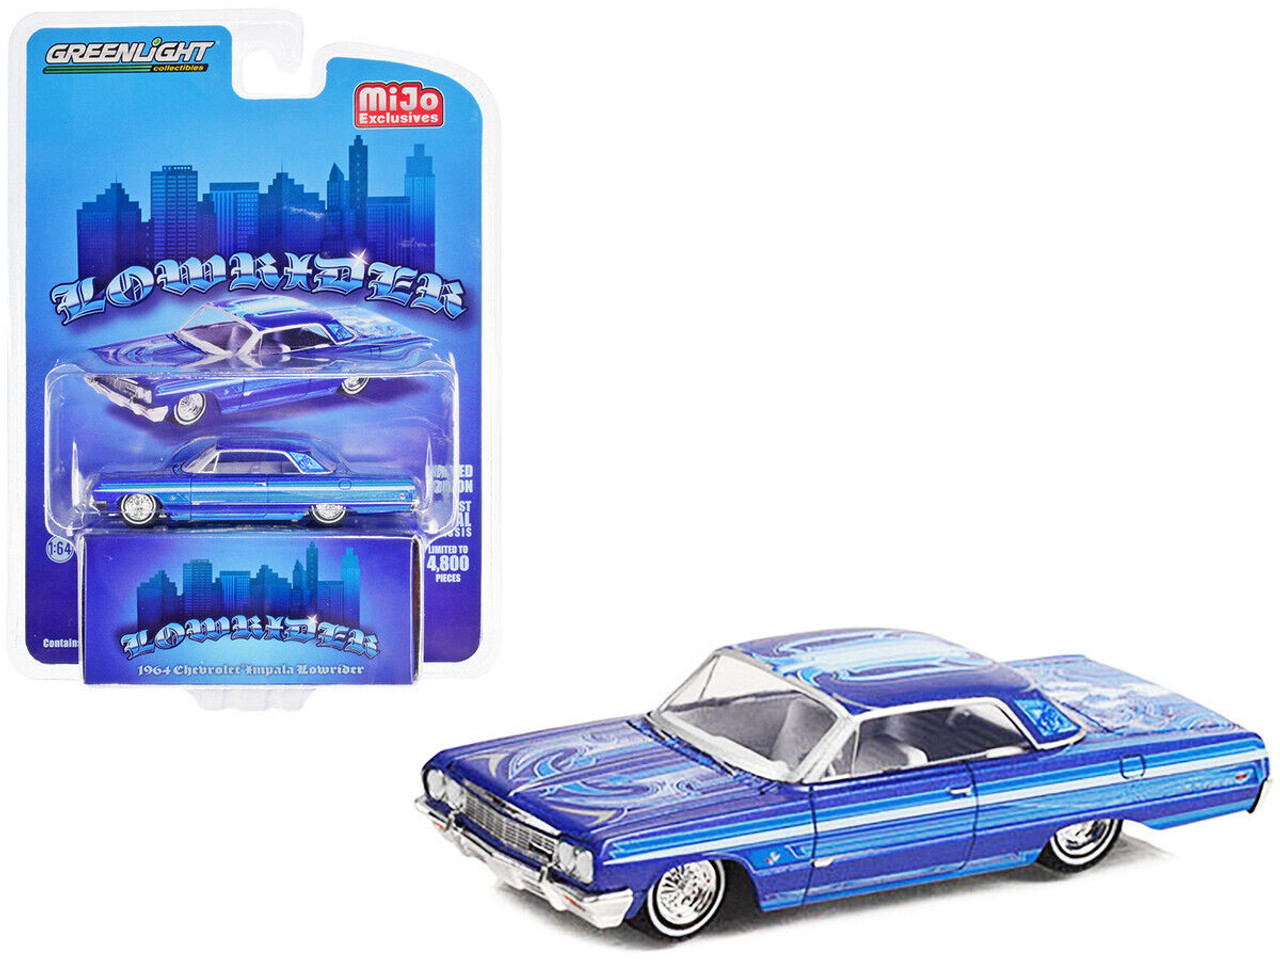 64 impala ss blue lowrider